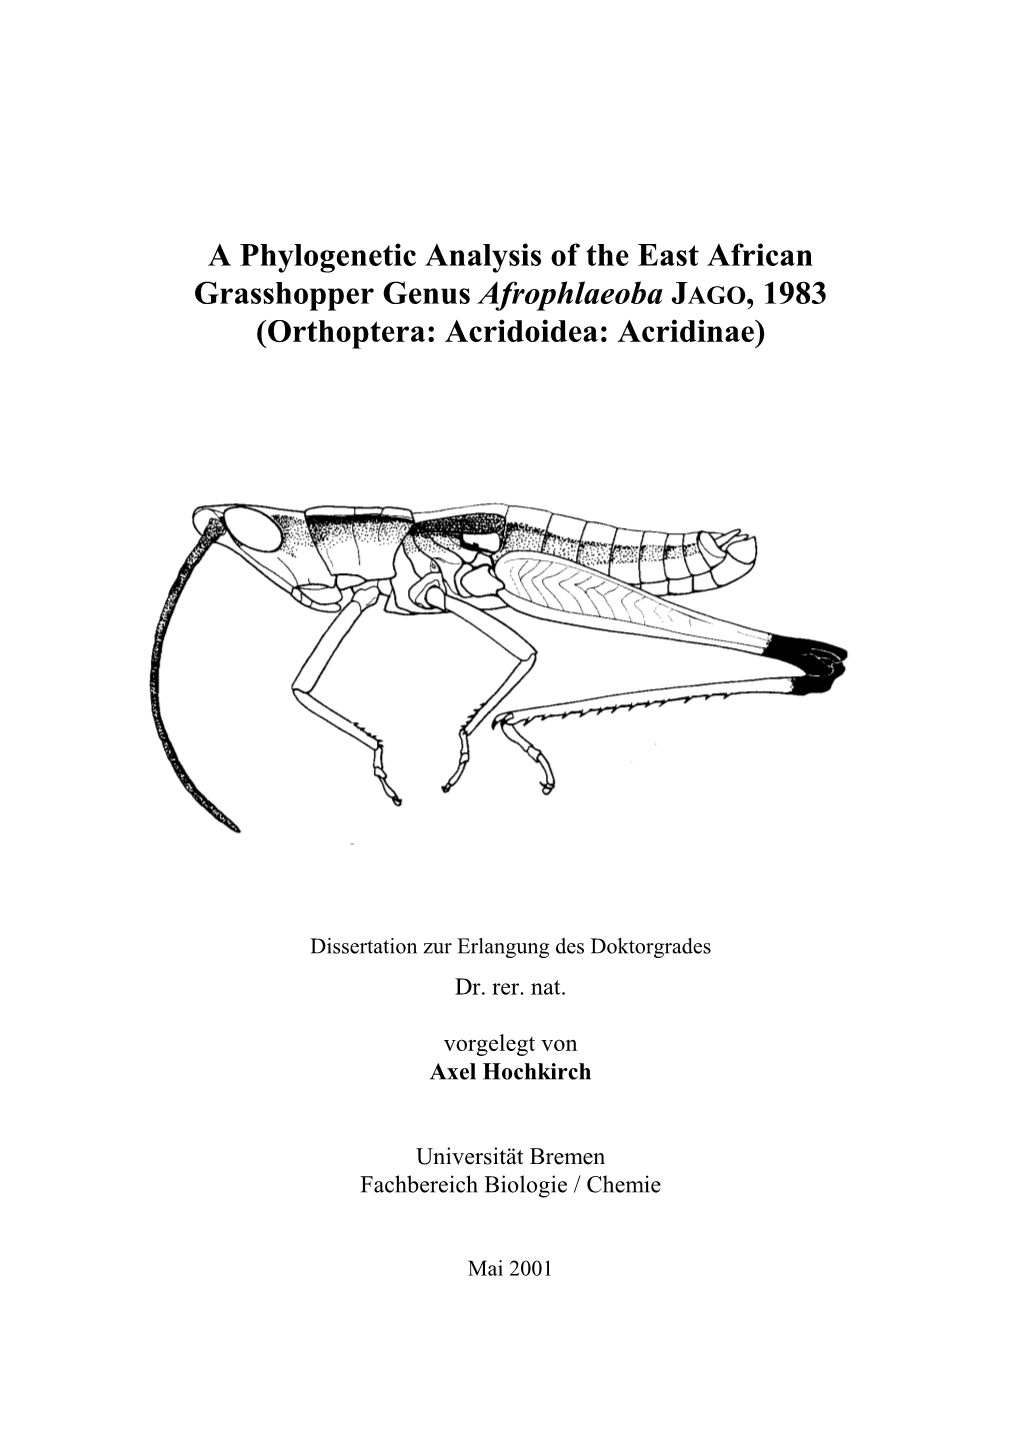 A Phylogenetic Analysis of the East African Grasshopper Genus Afrophlaeoba JAGO, 1983 (Orthoptera: Acridoidea: Acridinae)